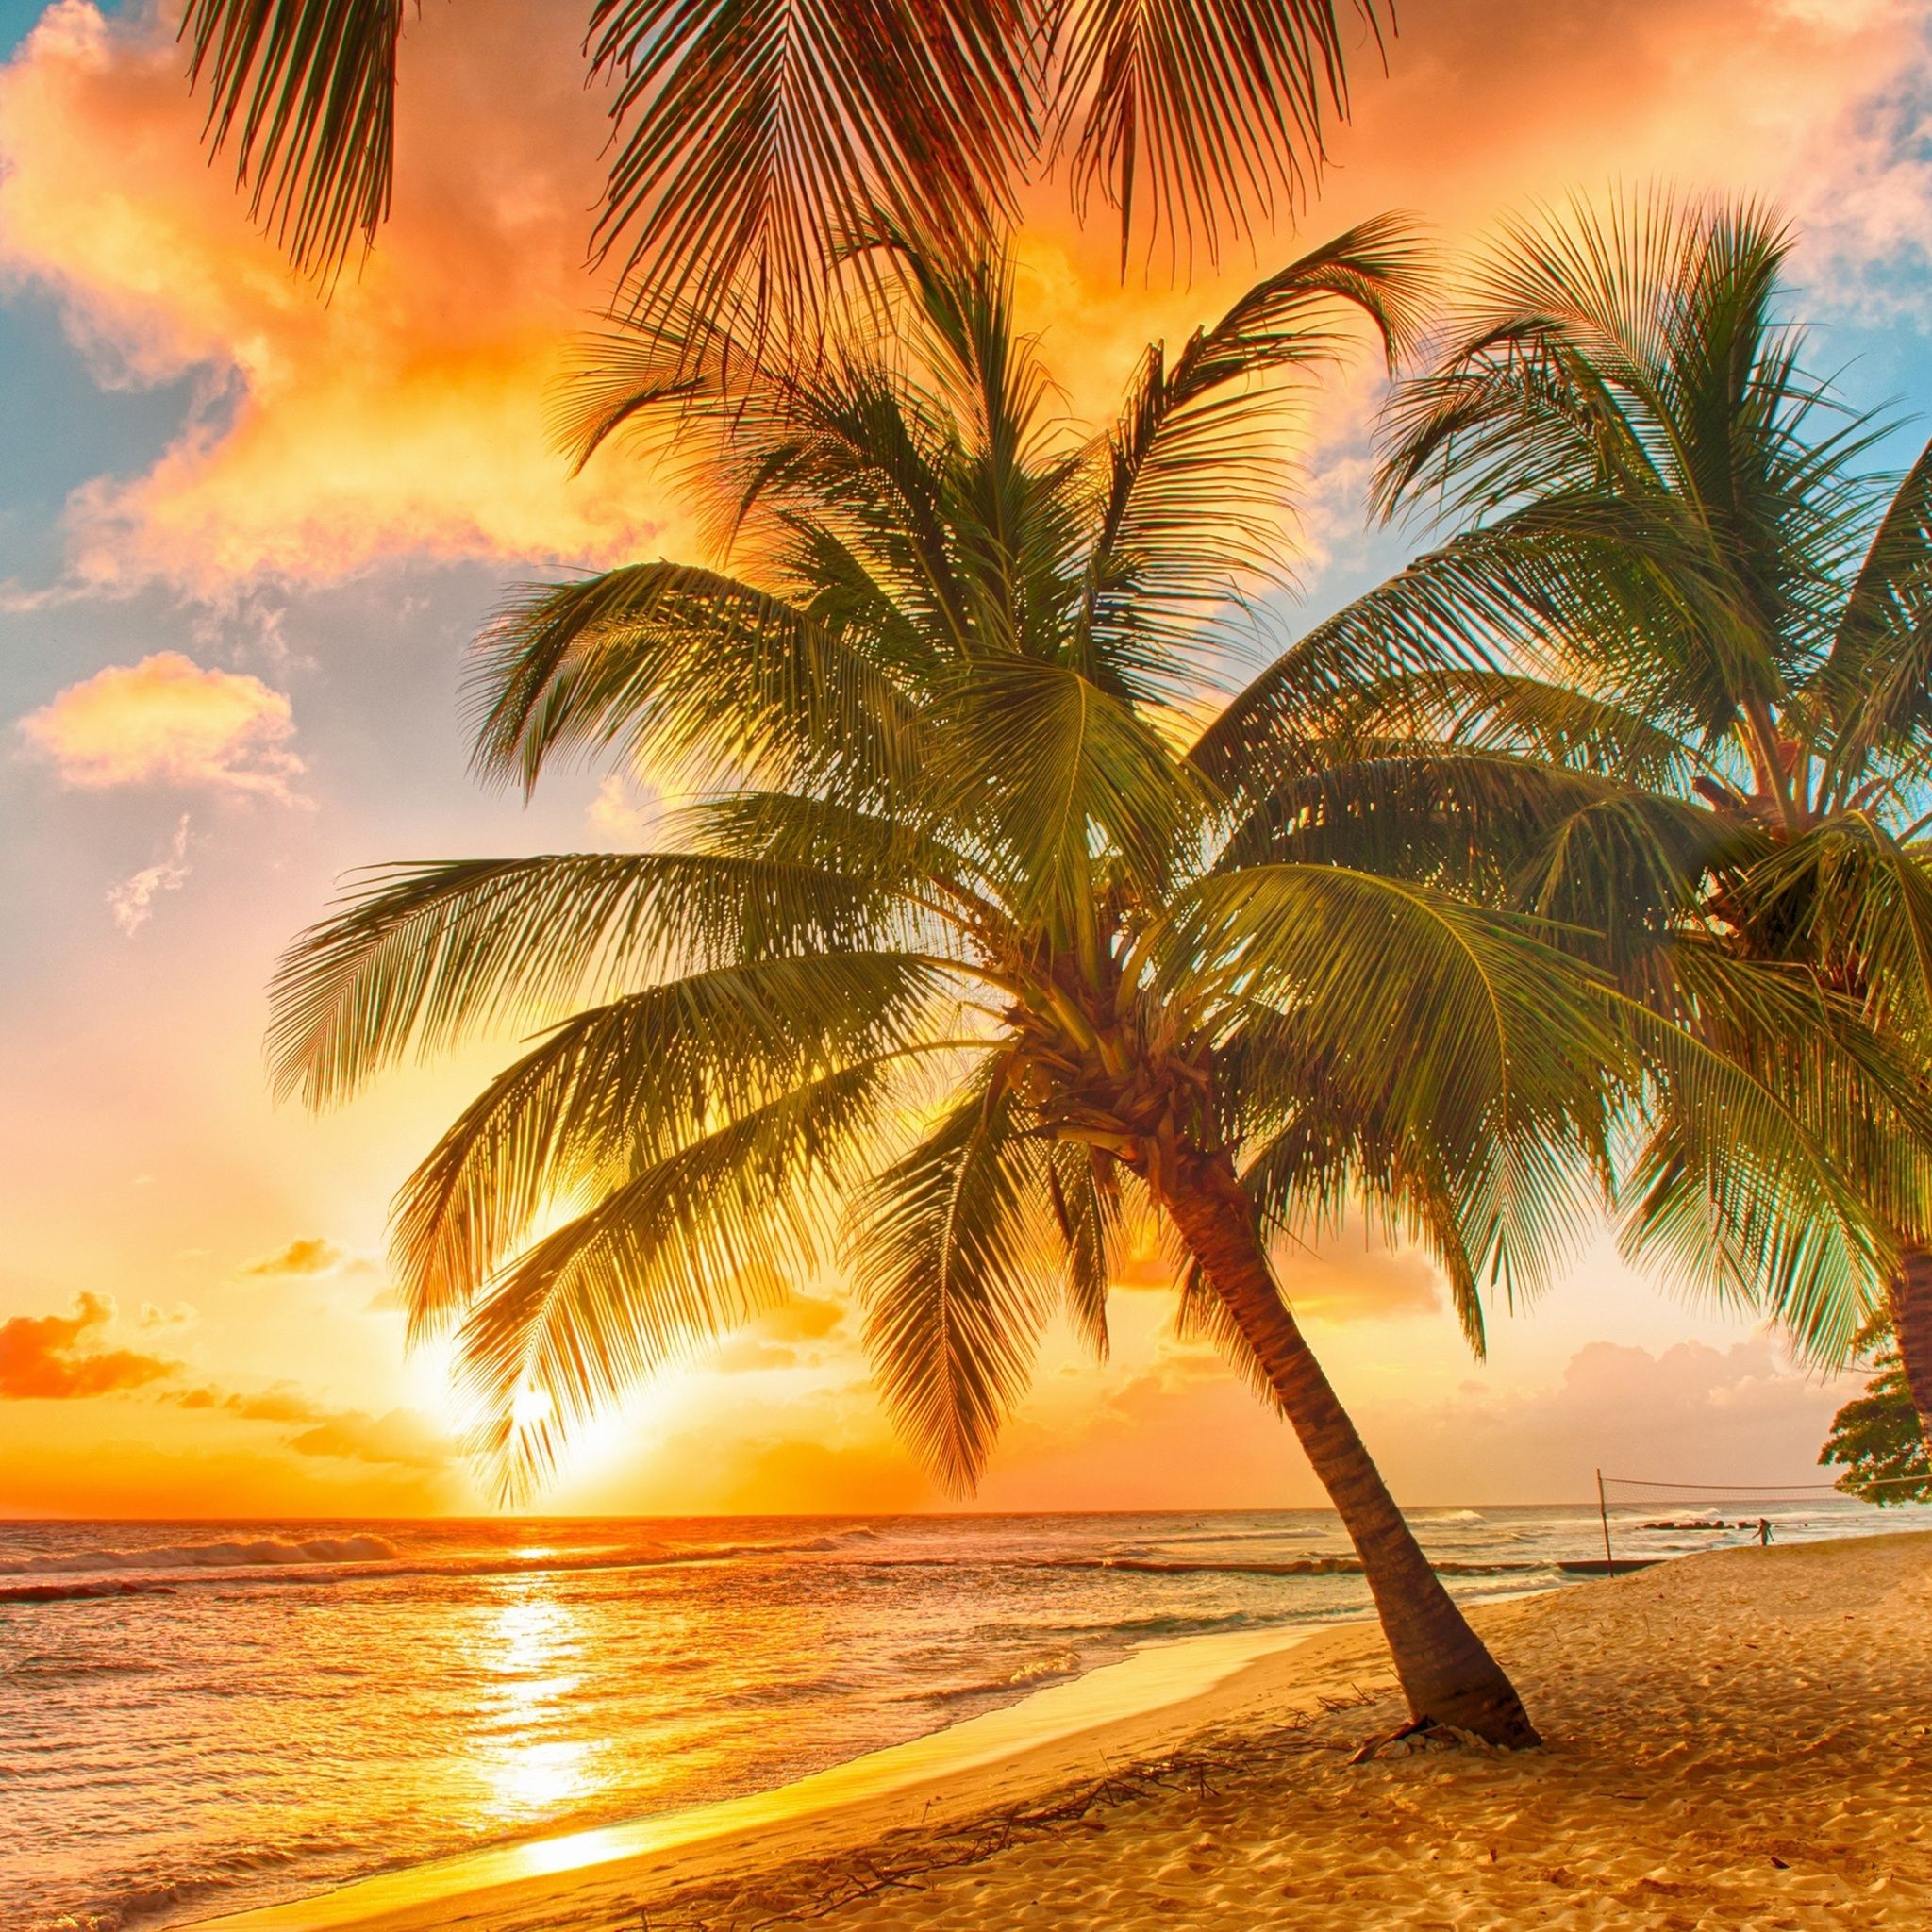 Palm Tree Tropical Beach iPad Air Wallpaper Download | iPhone ...